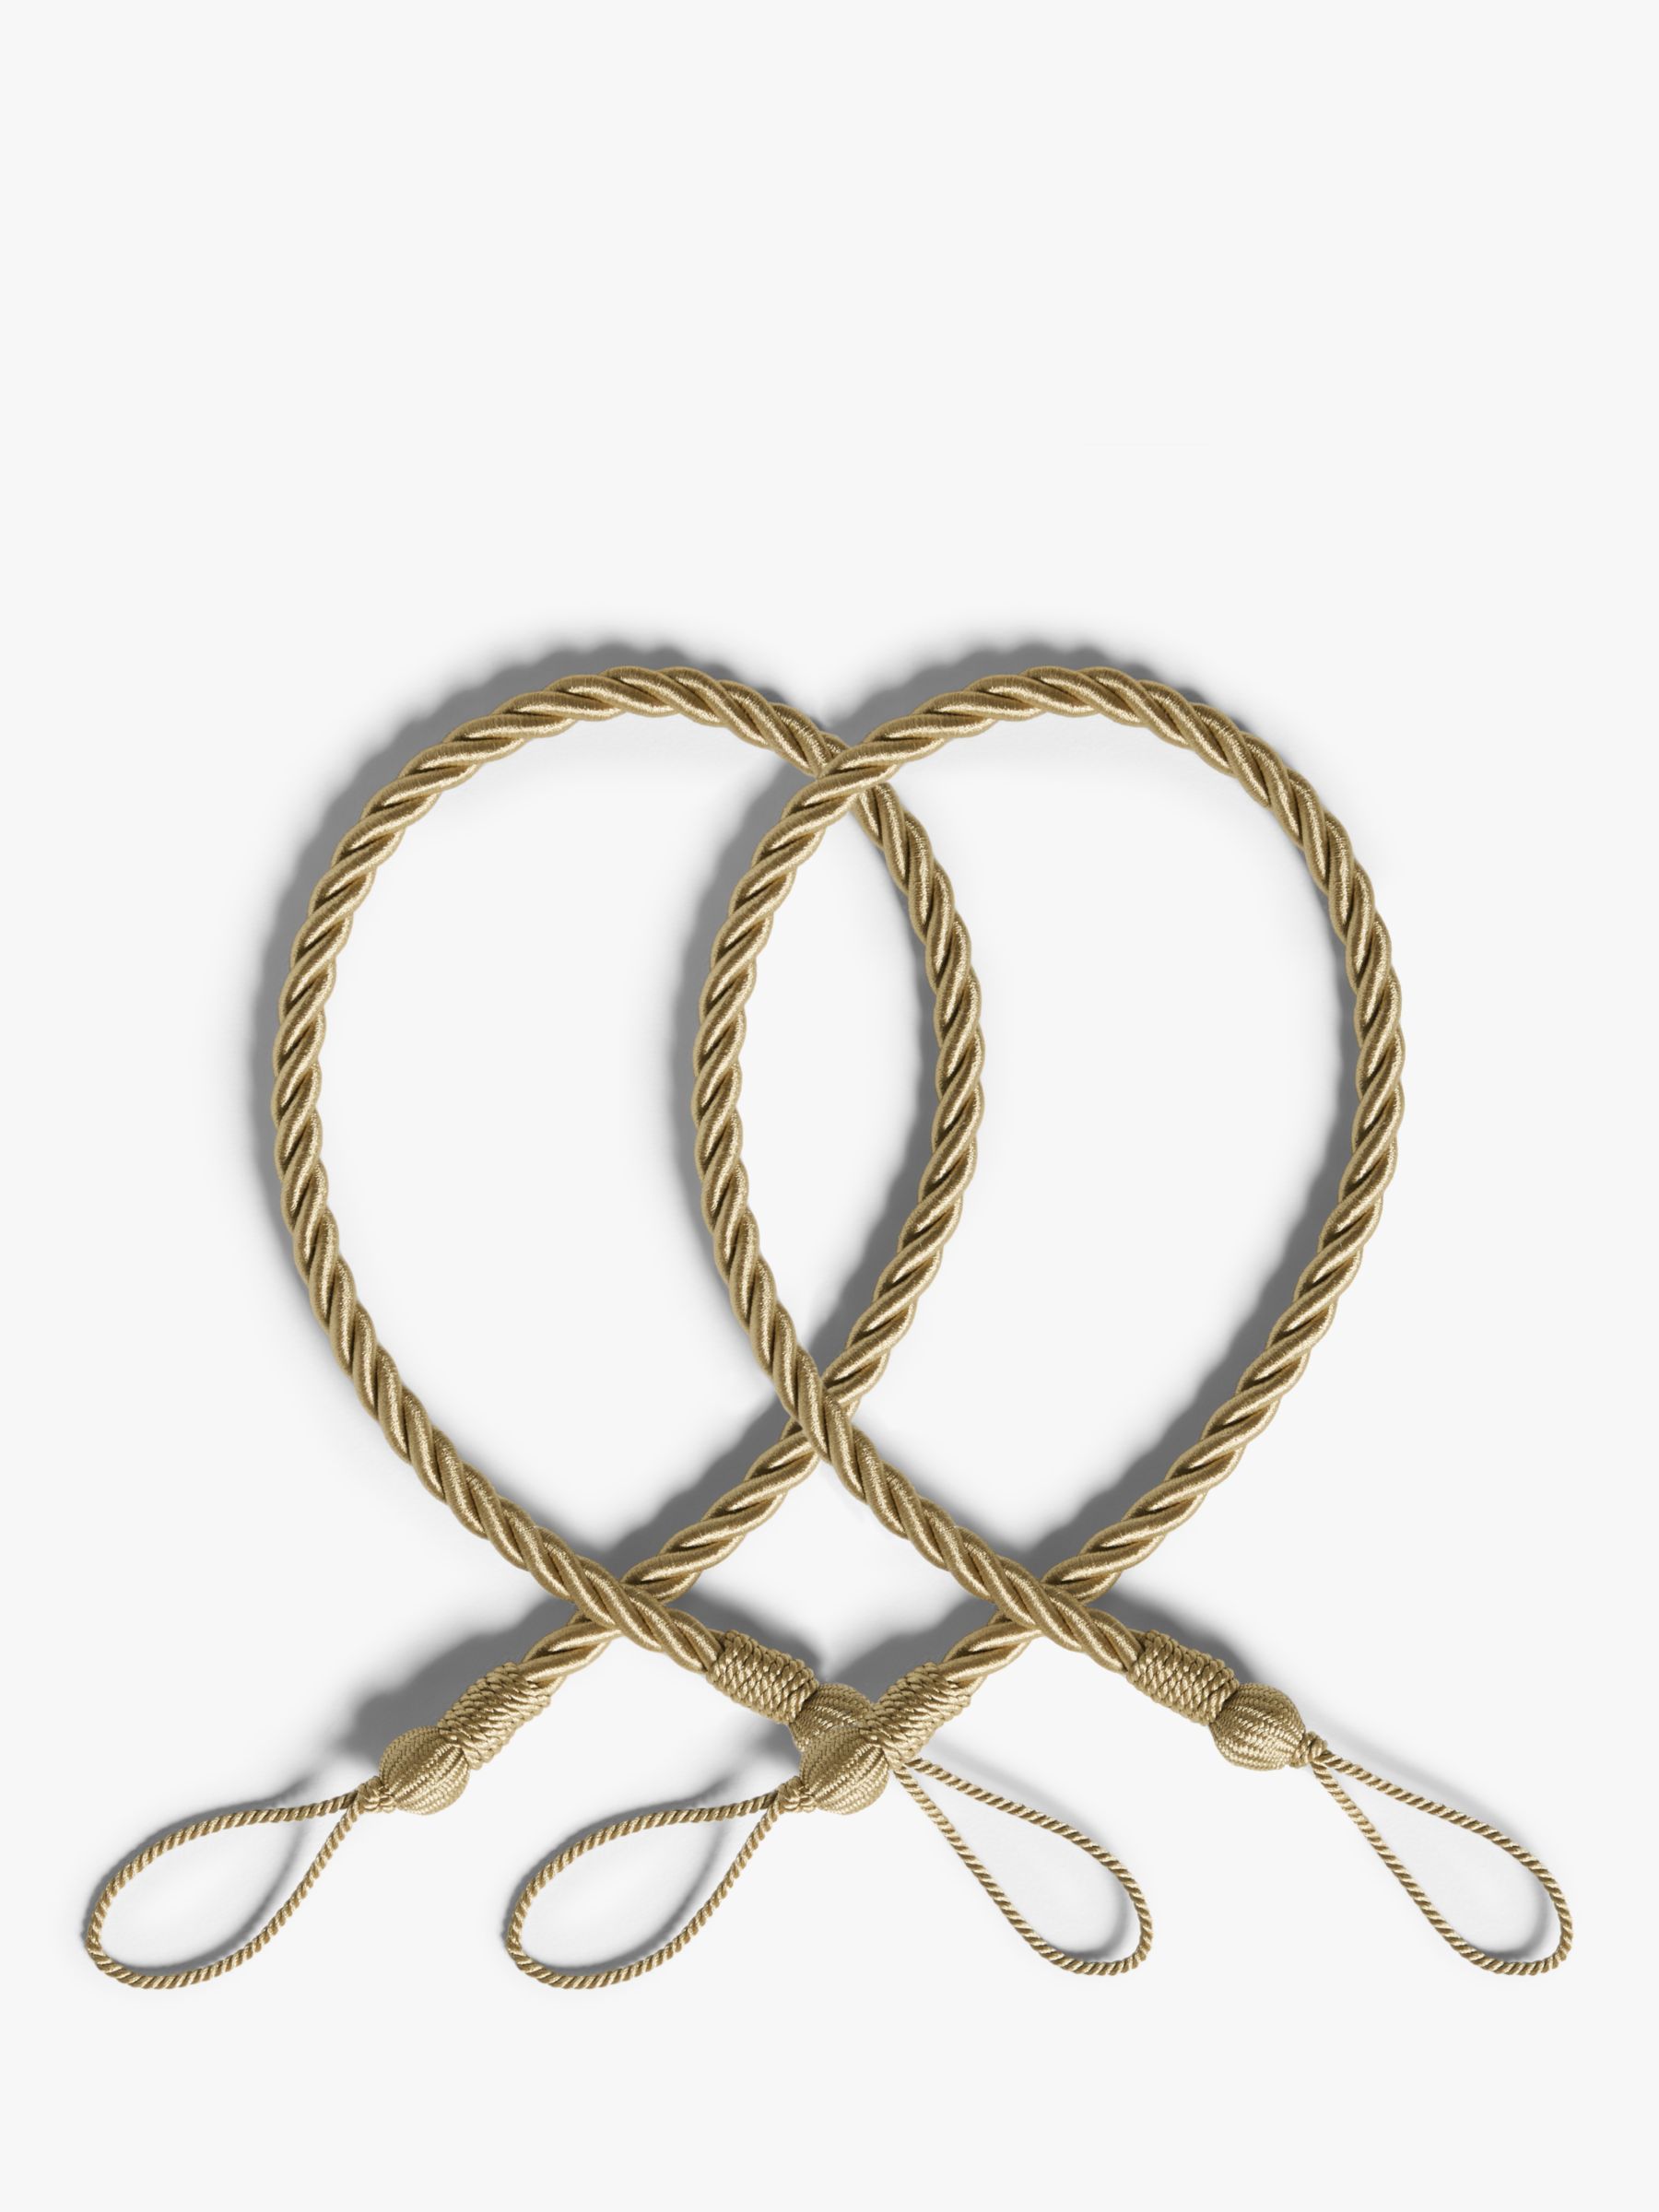 John Lewis Small Rope Tieback, Gold, Pack of 2